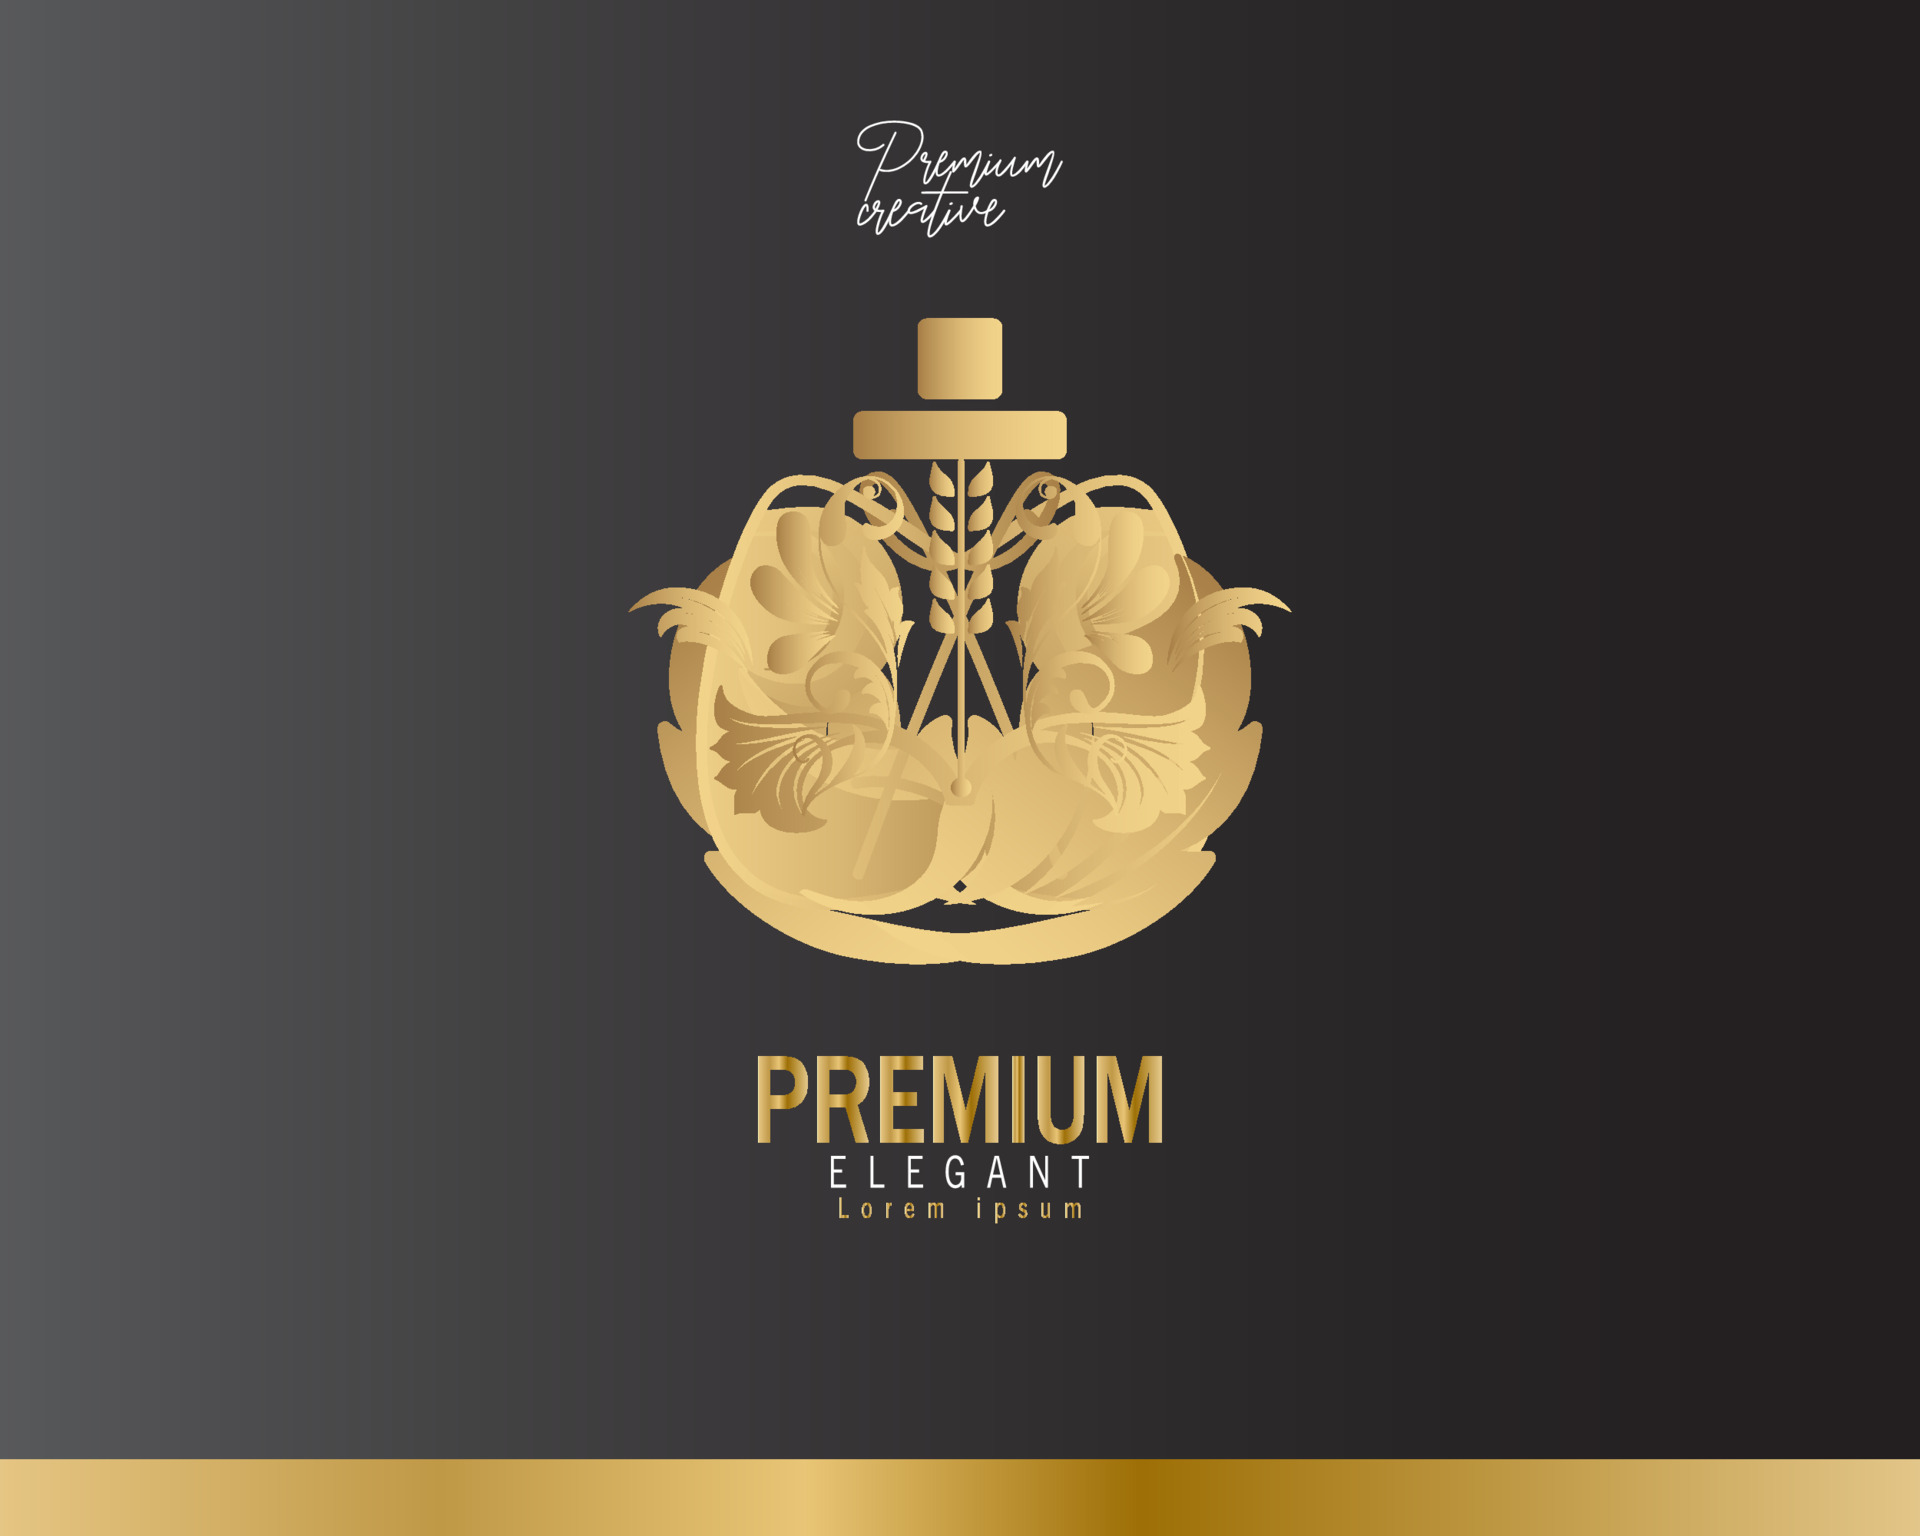 Free Vector  Luxury perfume logo with golden design